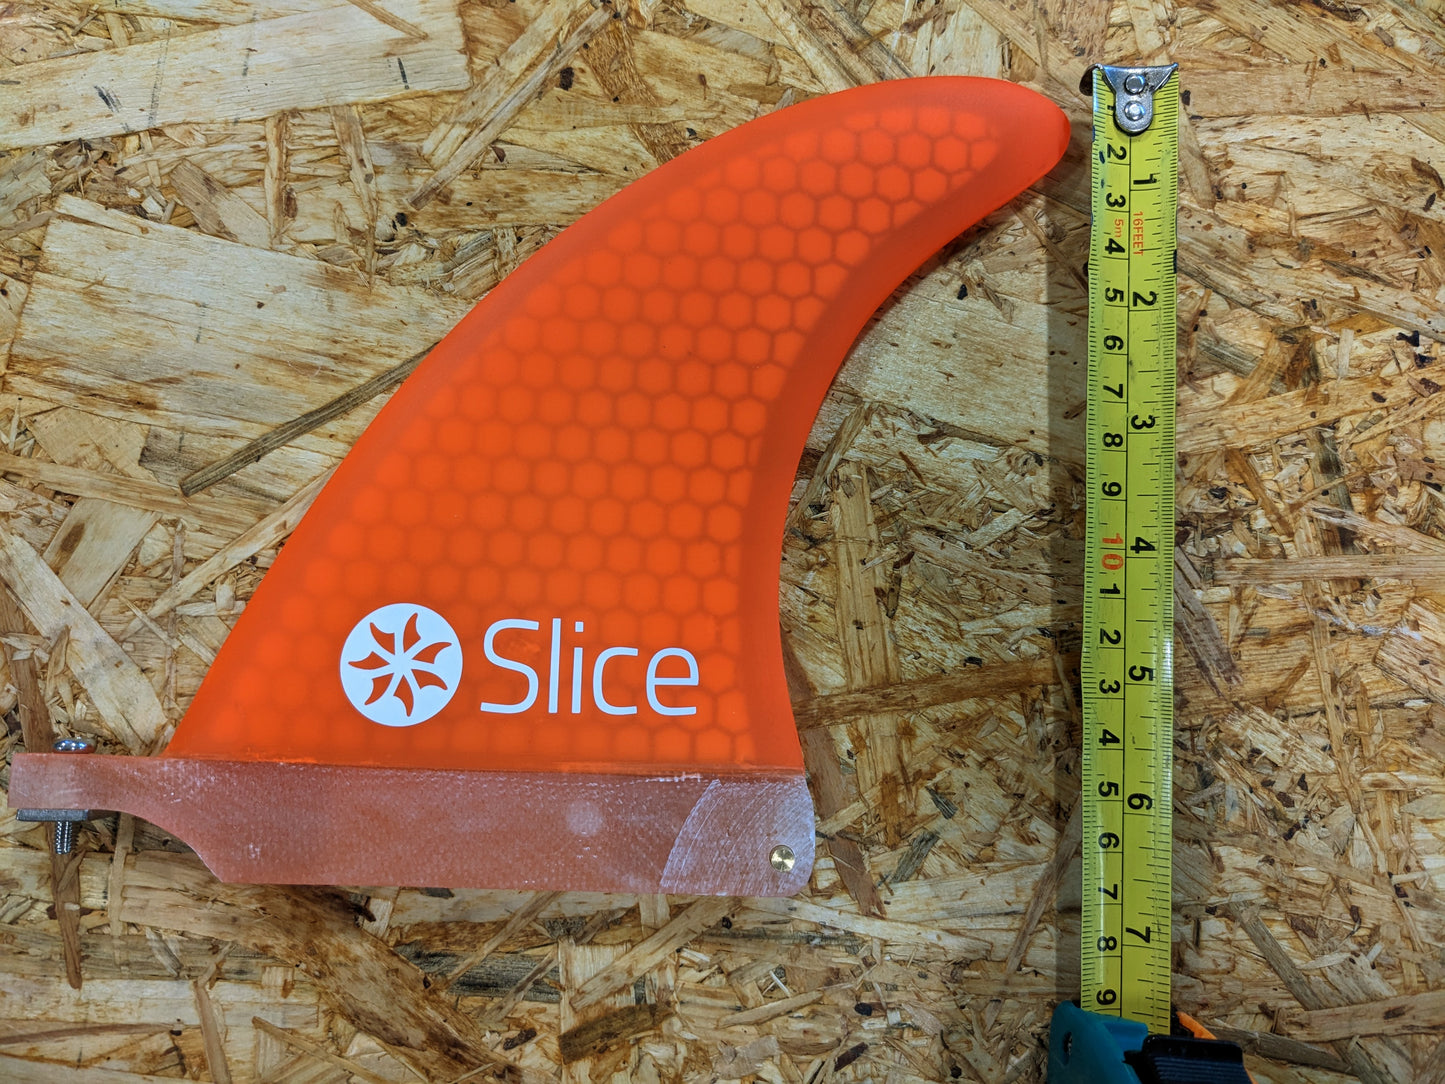 Slice 6" Centre Fins